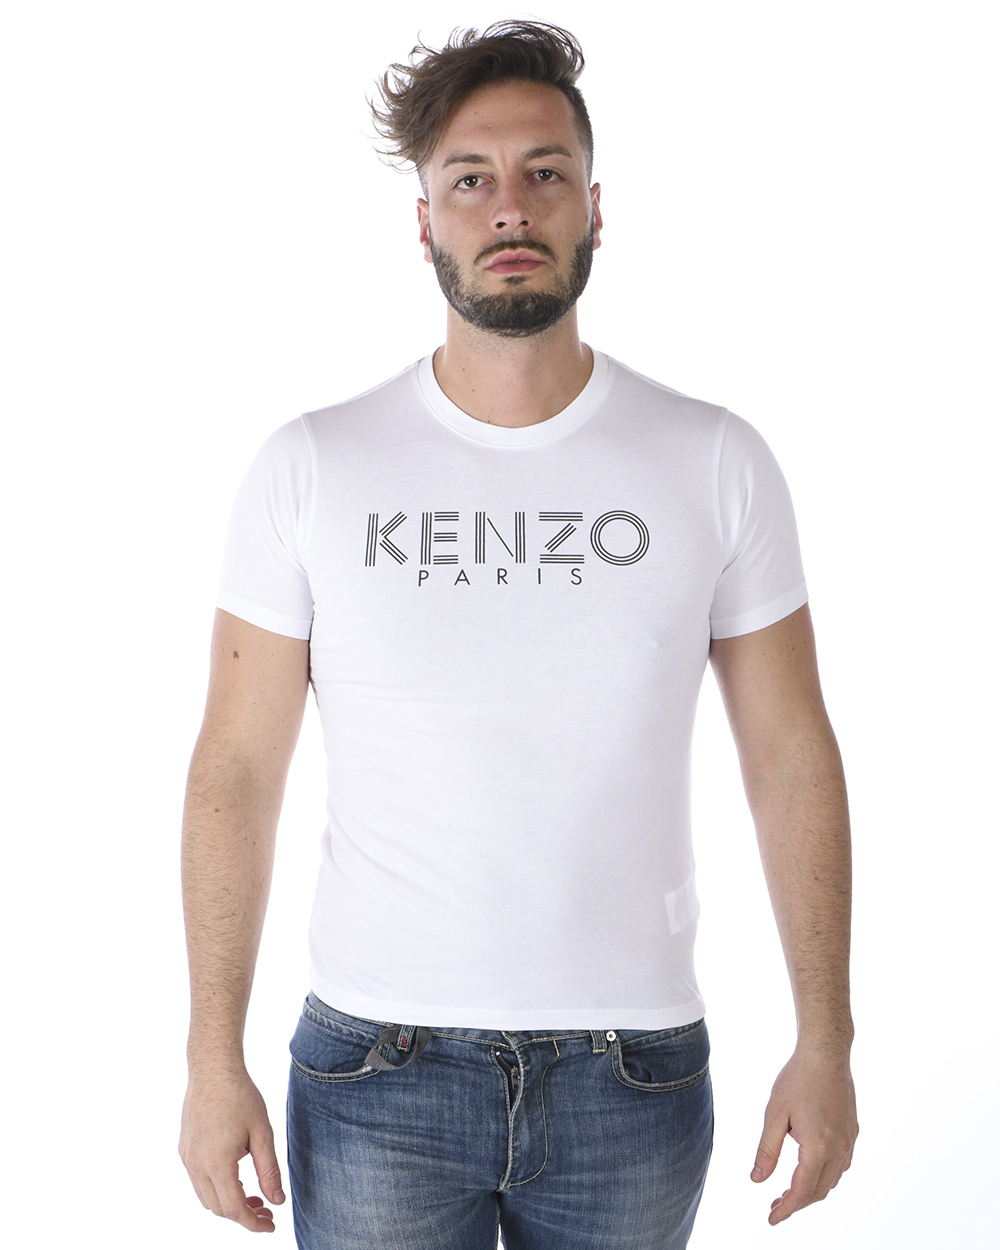 kenzo man shirt